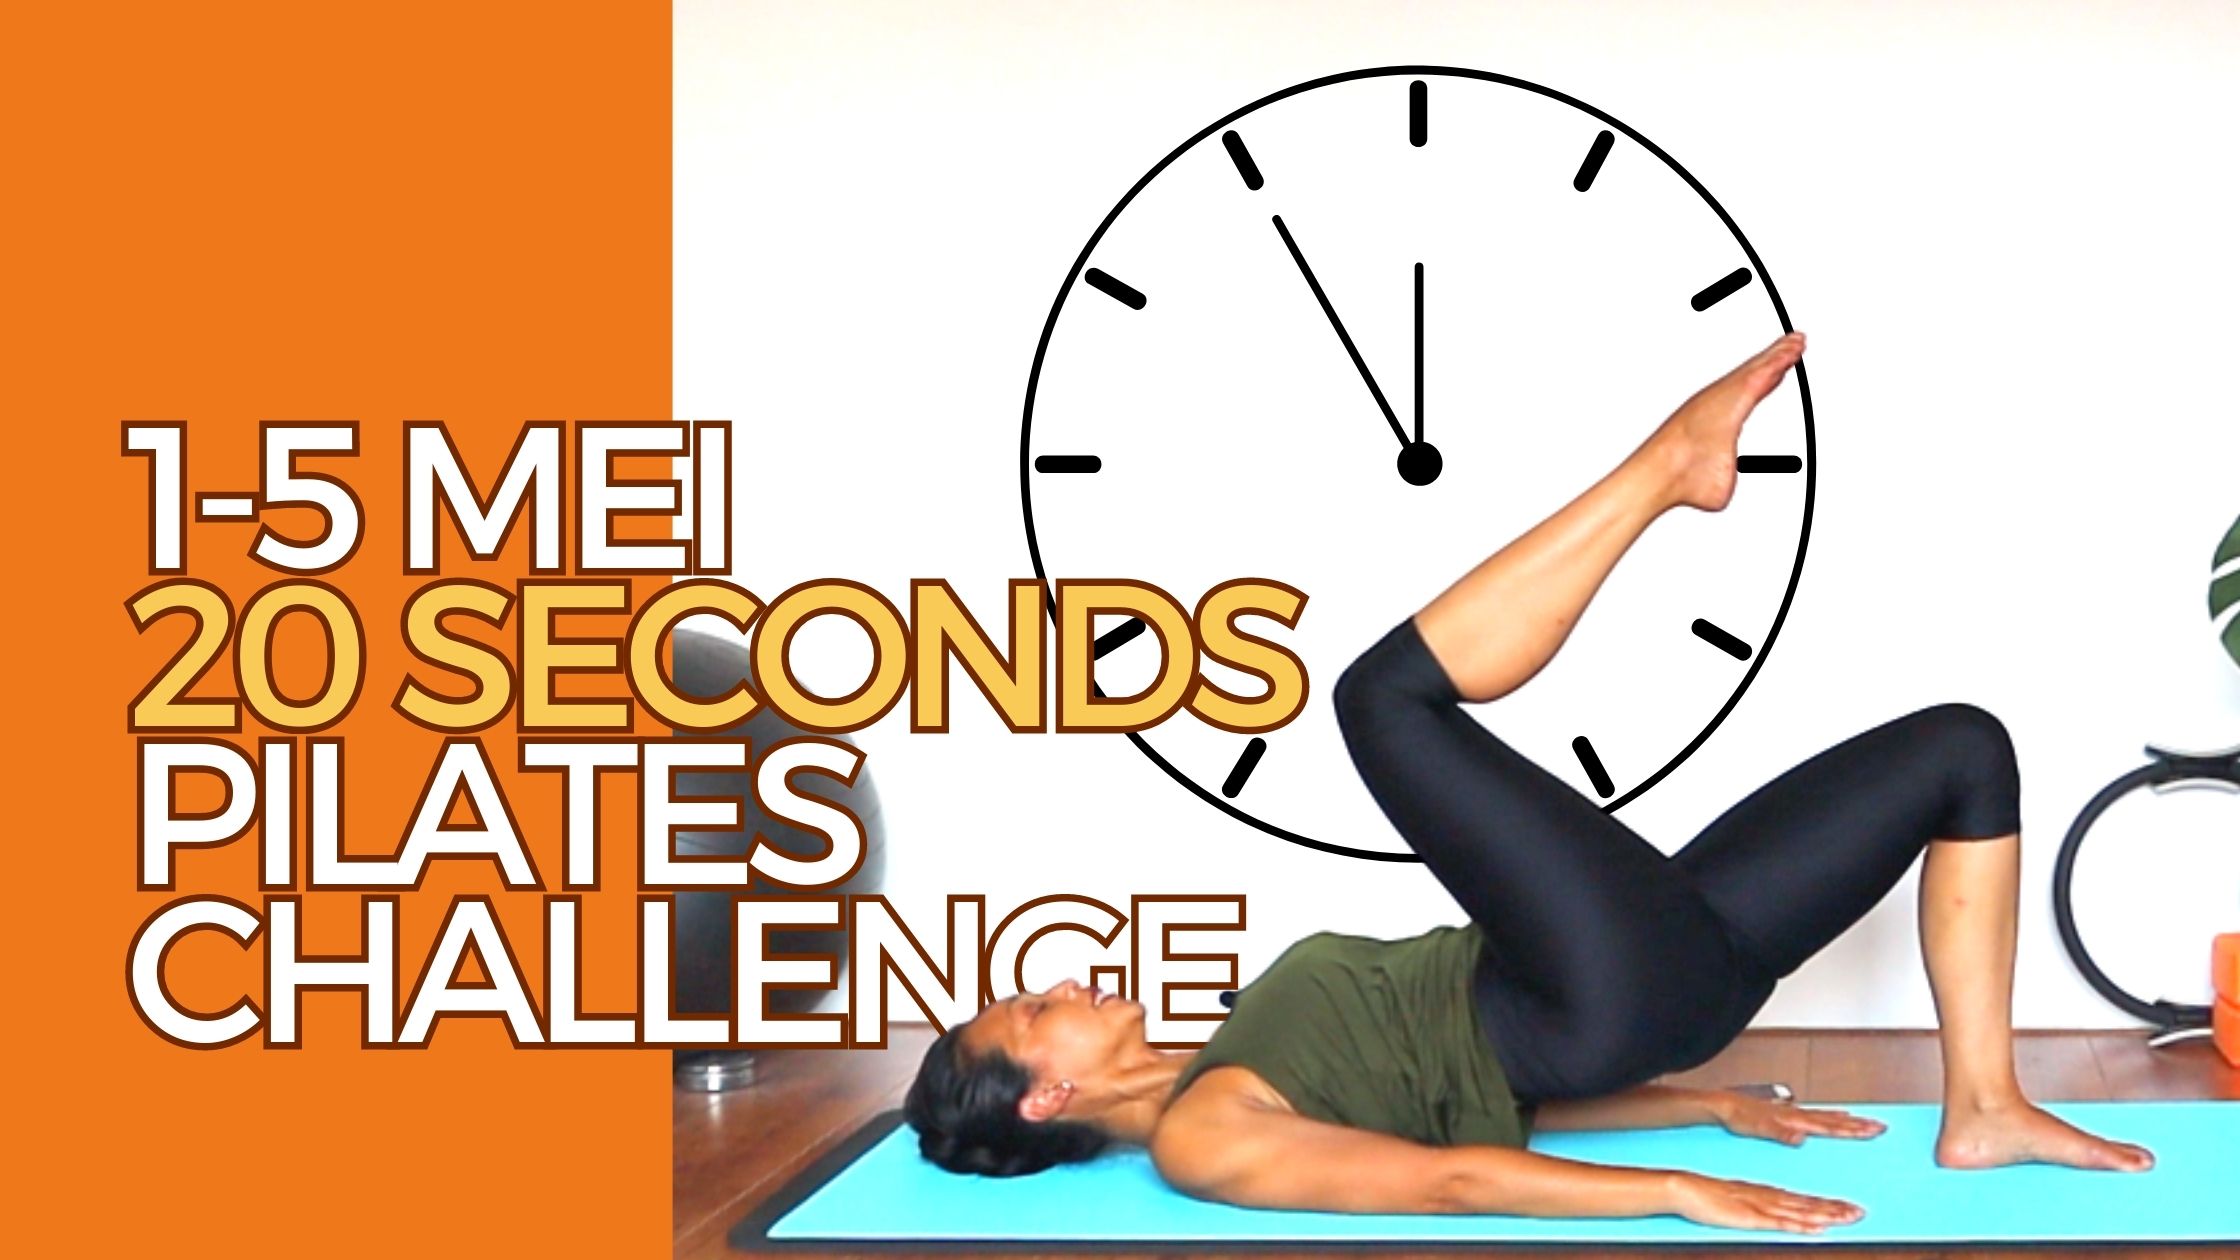 20 seconds pilates challenge